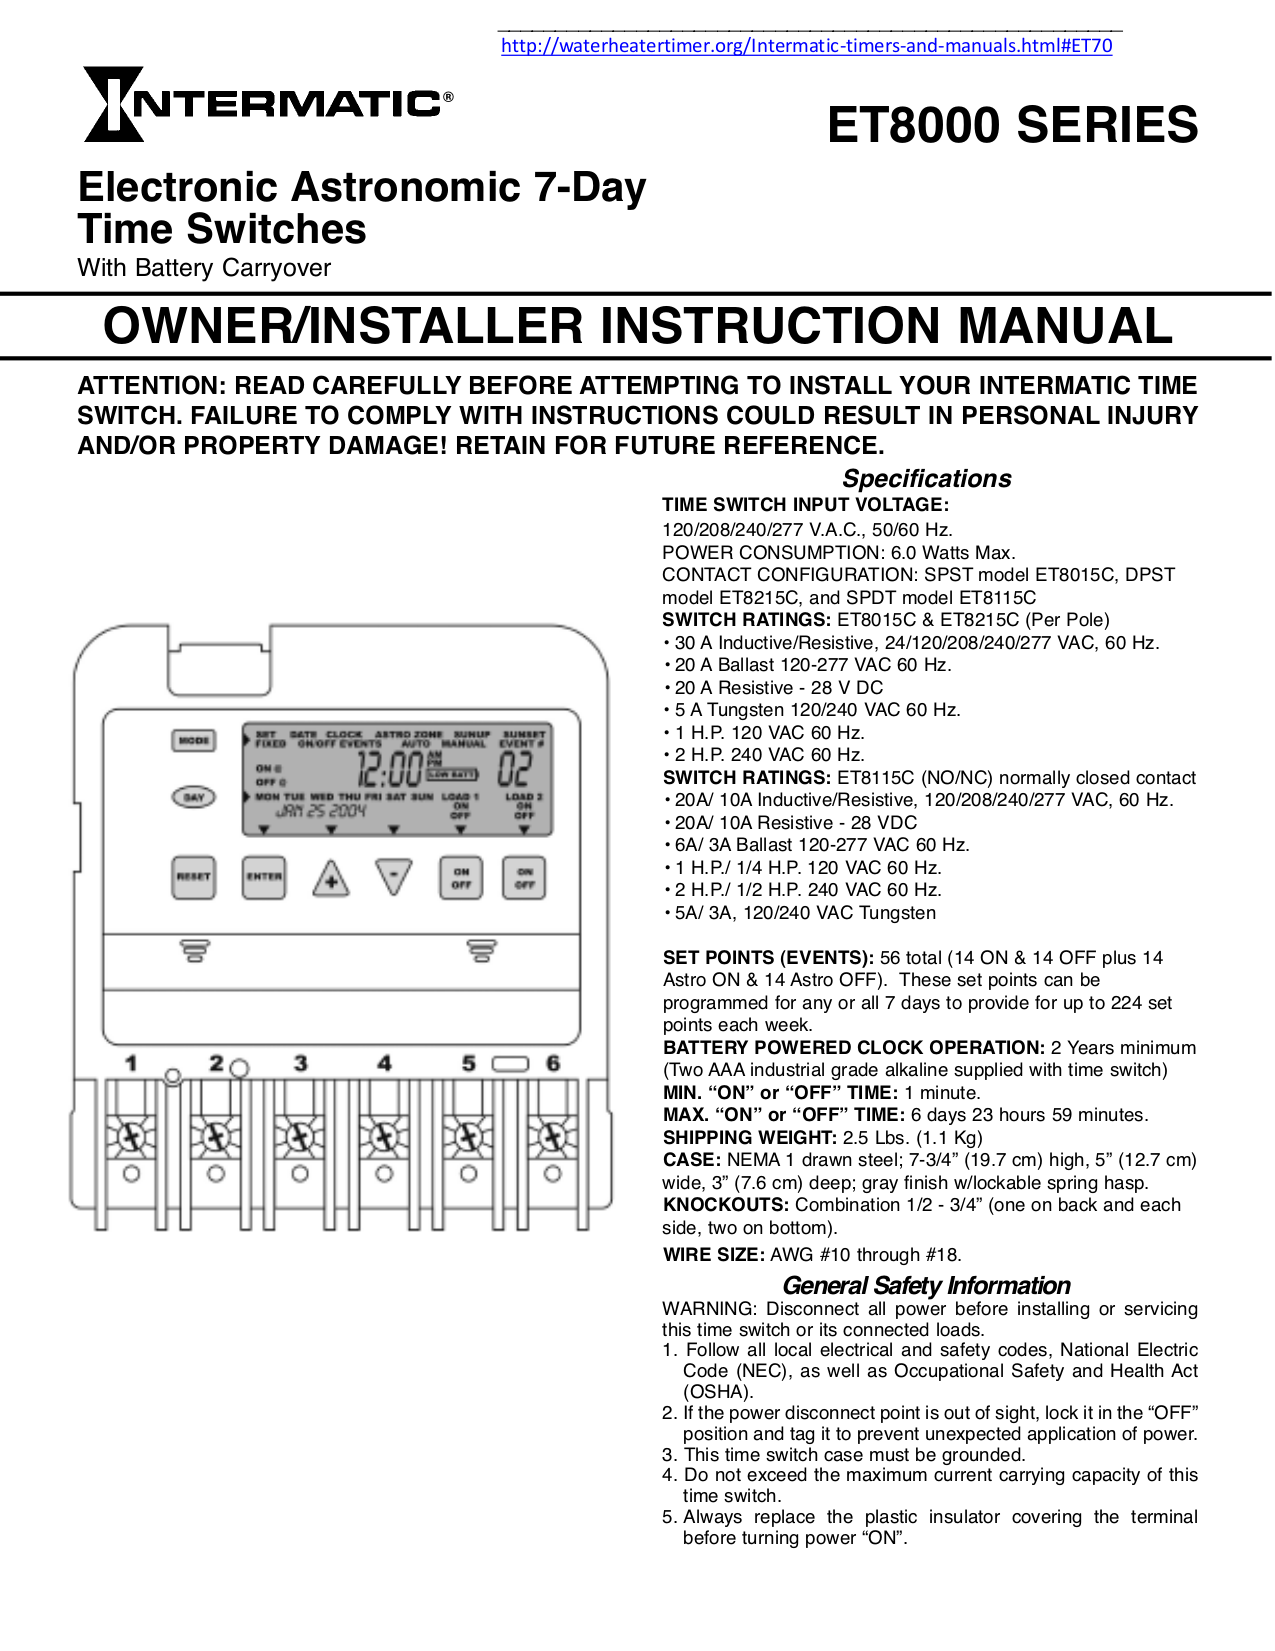 intermatic timer manuals